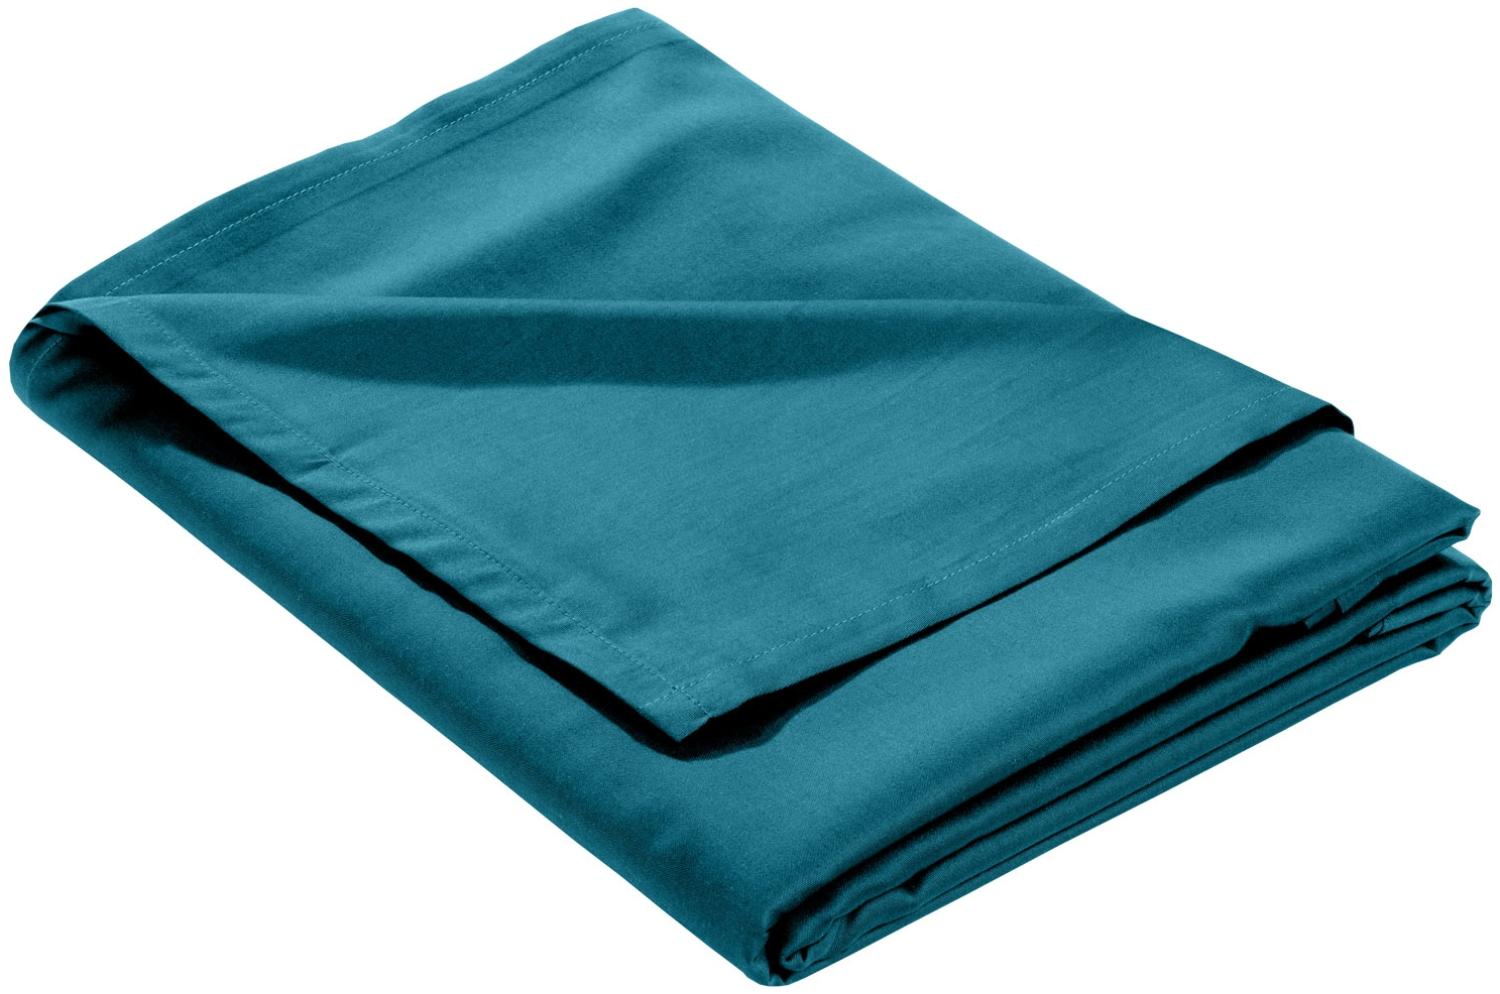 Mako Satin Bettlaken ohne Gummizug petrol blau 240x280cm Bild 1